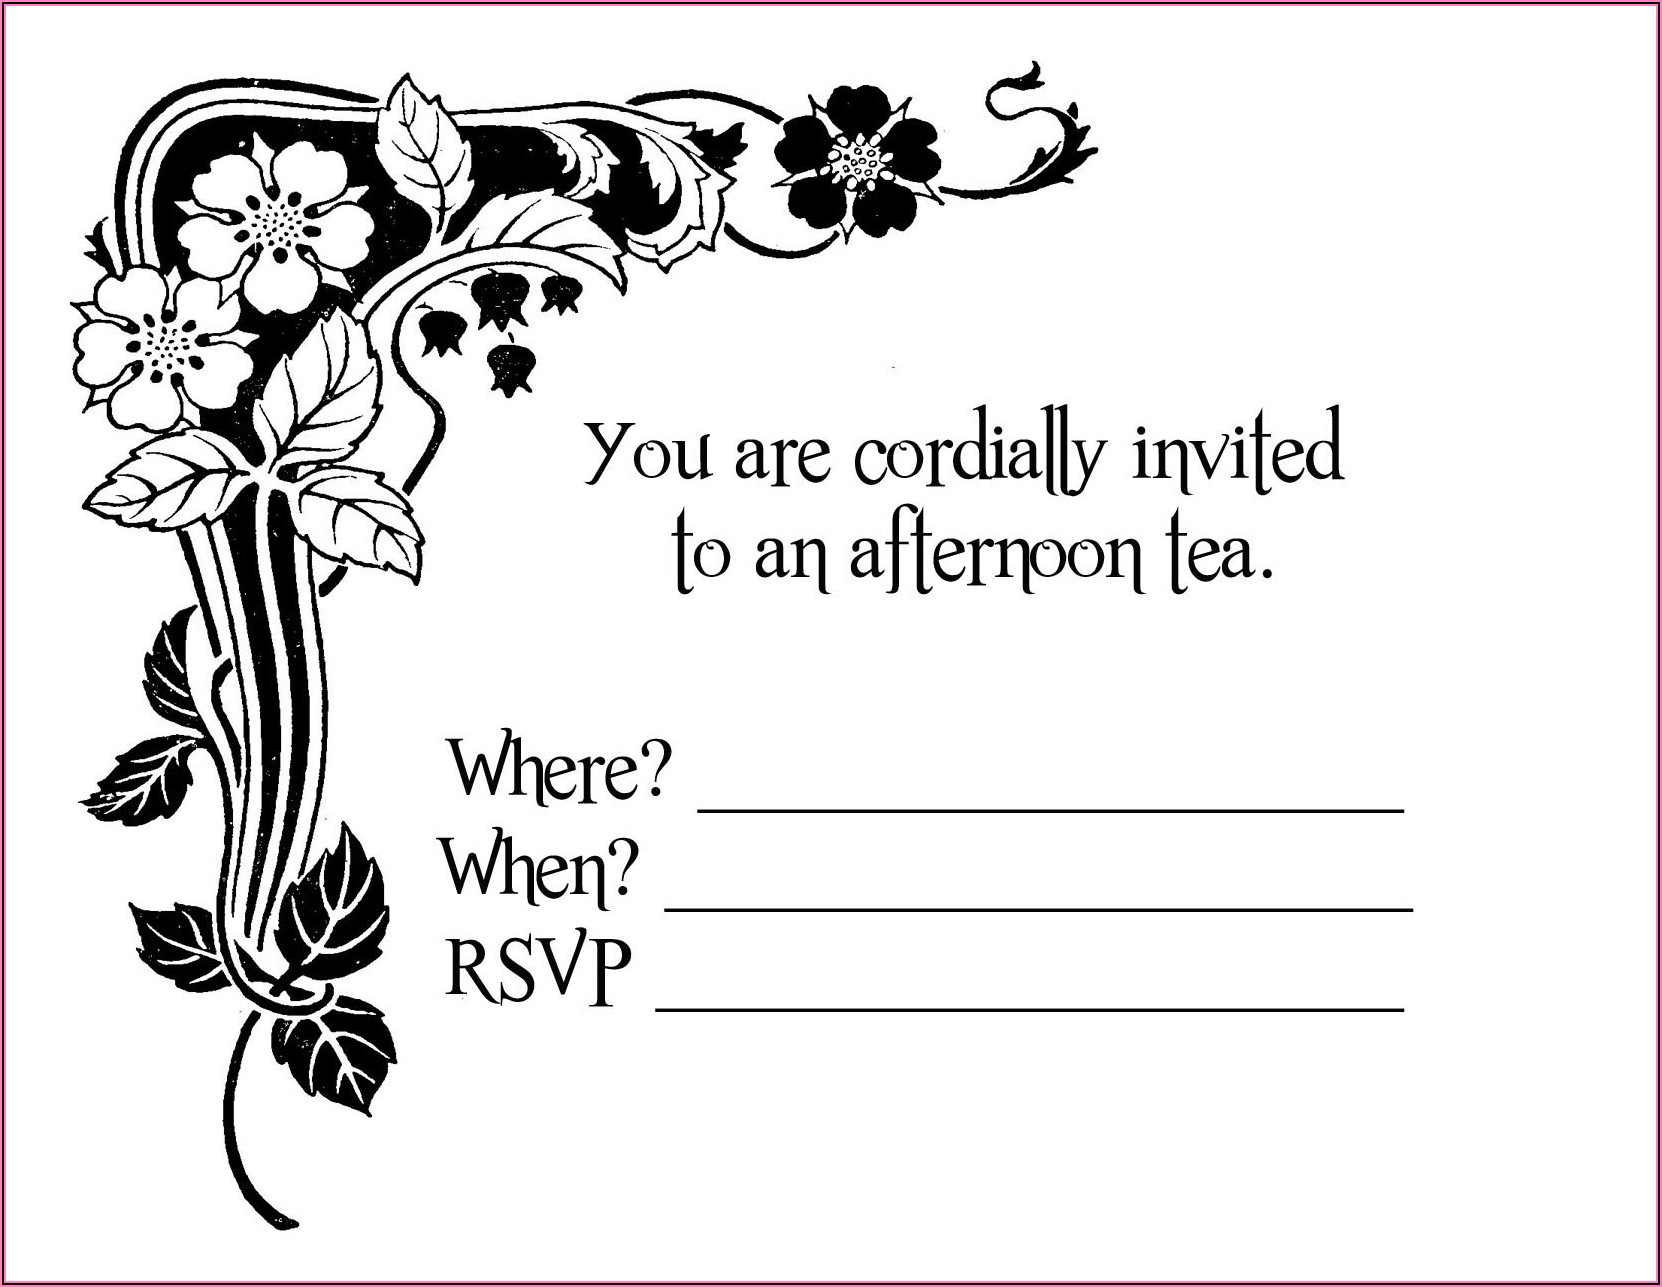 14th Birthday Party Invitation Wording